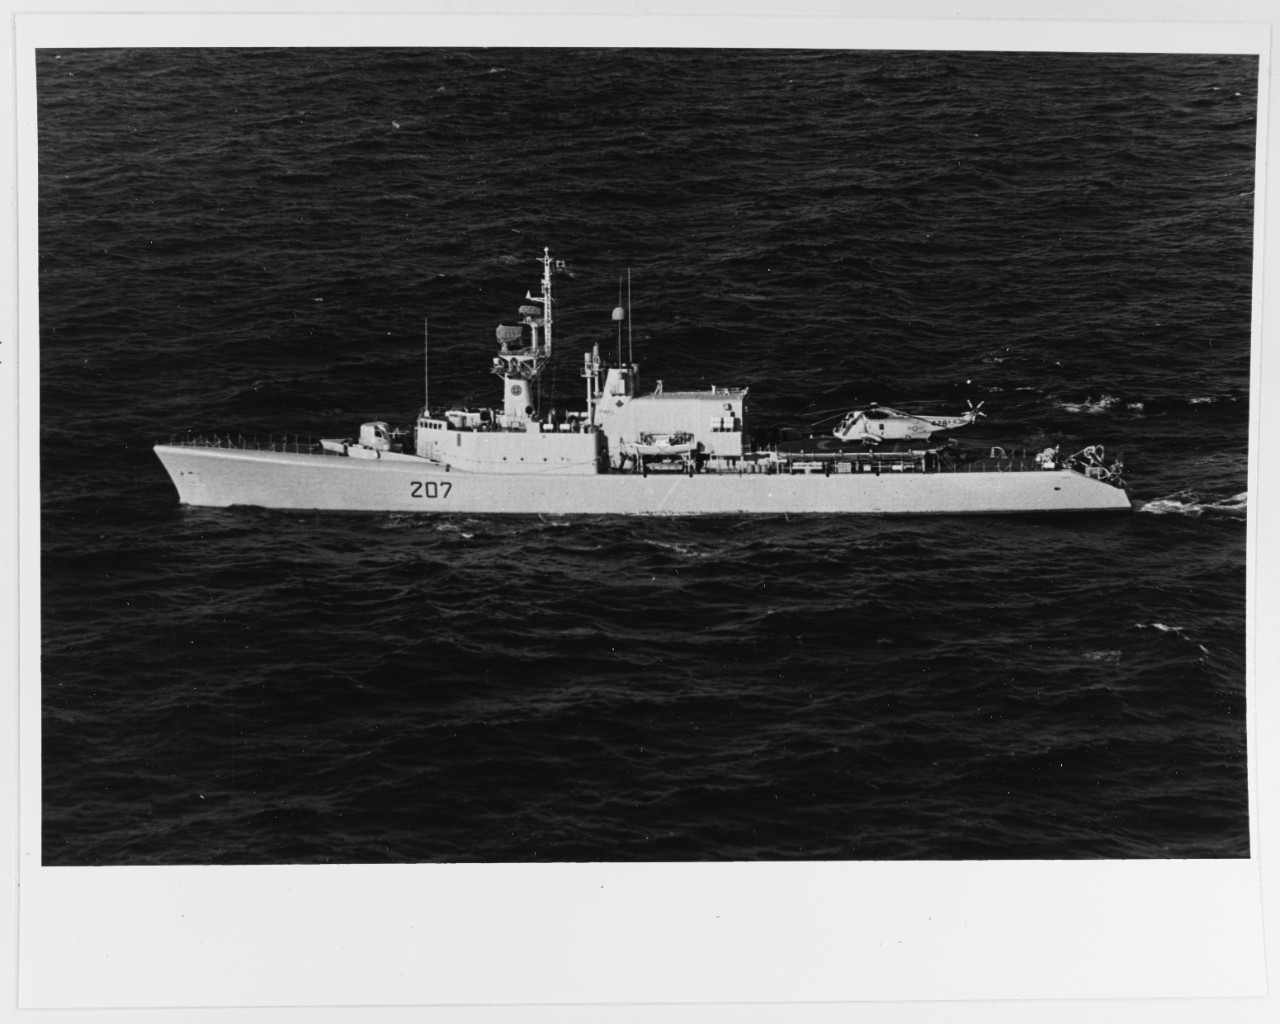 HMCS SKEENA (F-207) (Canadian Frigate, 1952)